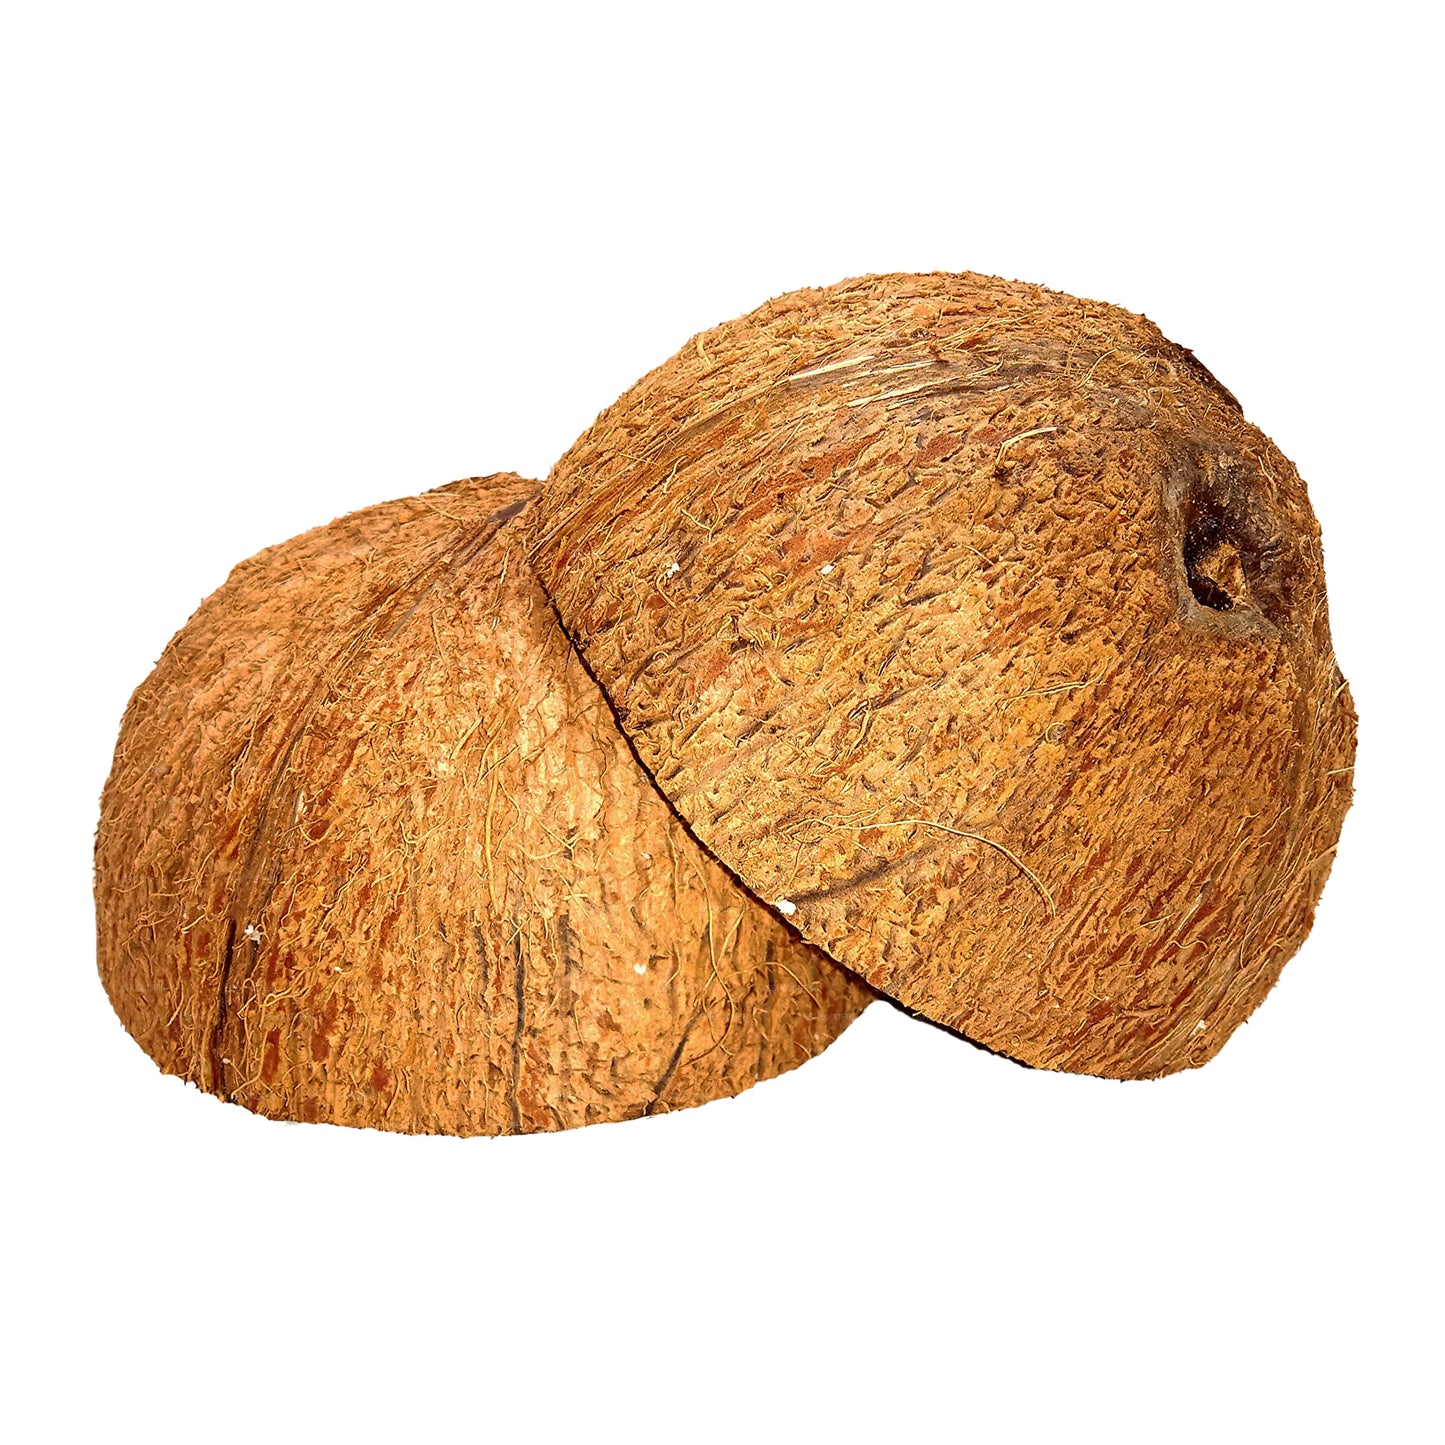 Coconut Shell Halves (2 stk)